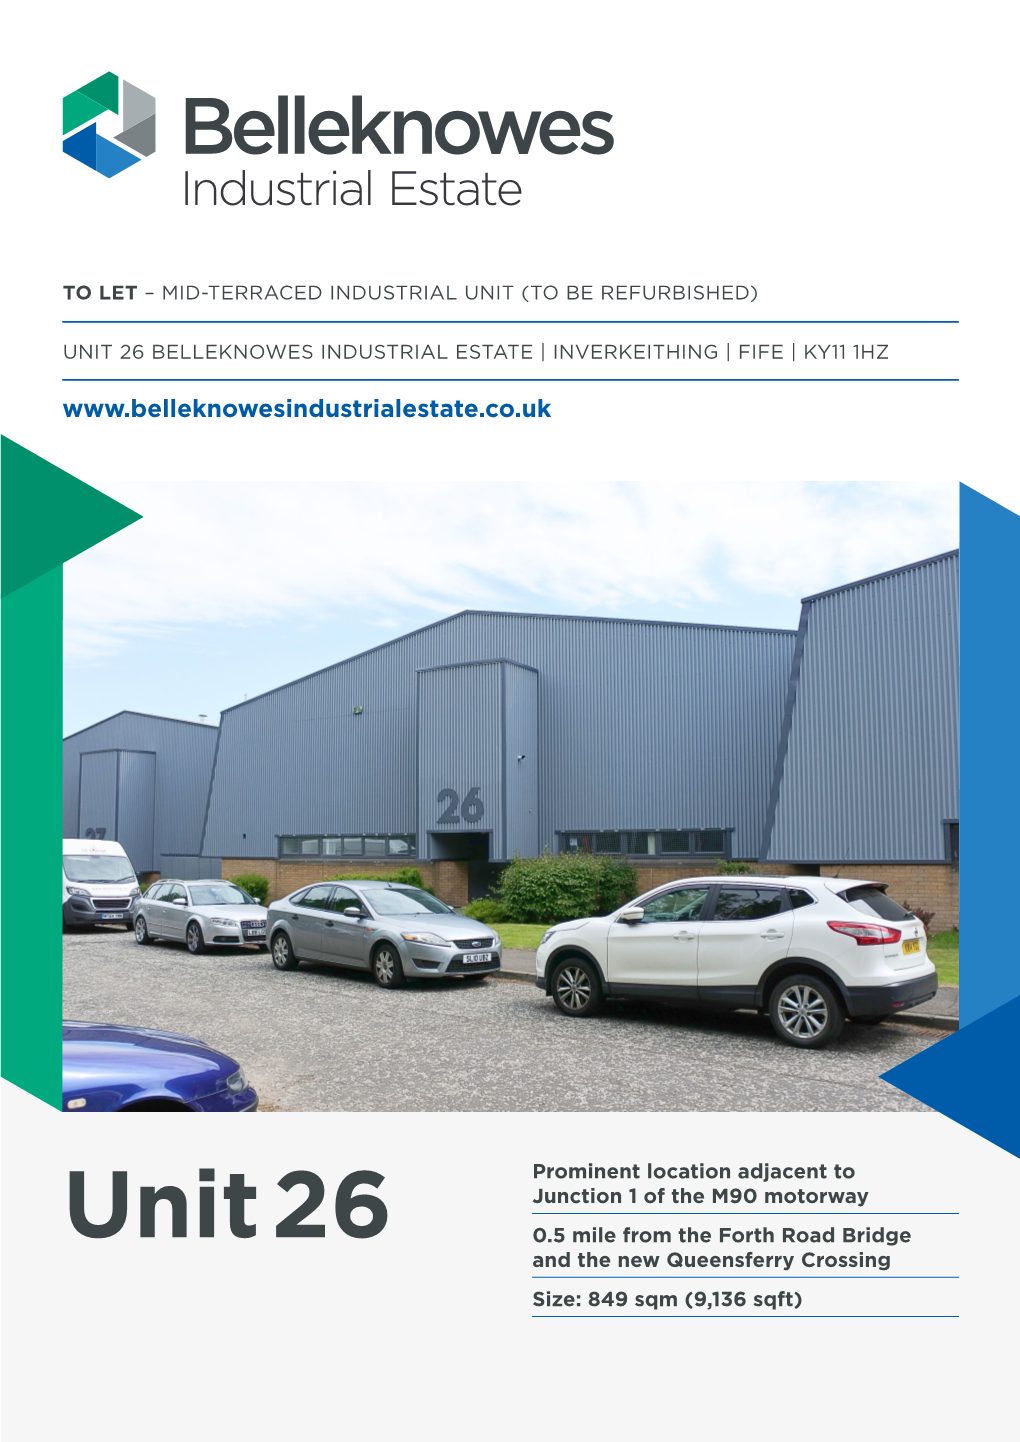 Unit 26 Belleknowes Industrial Estate | Inverkeithing | Fife | Ky11 1Hz